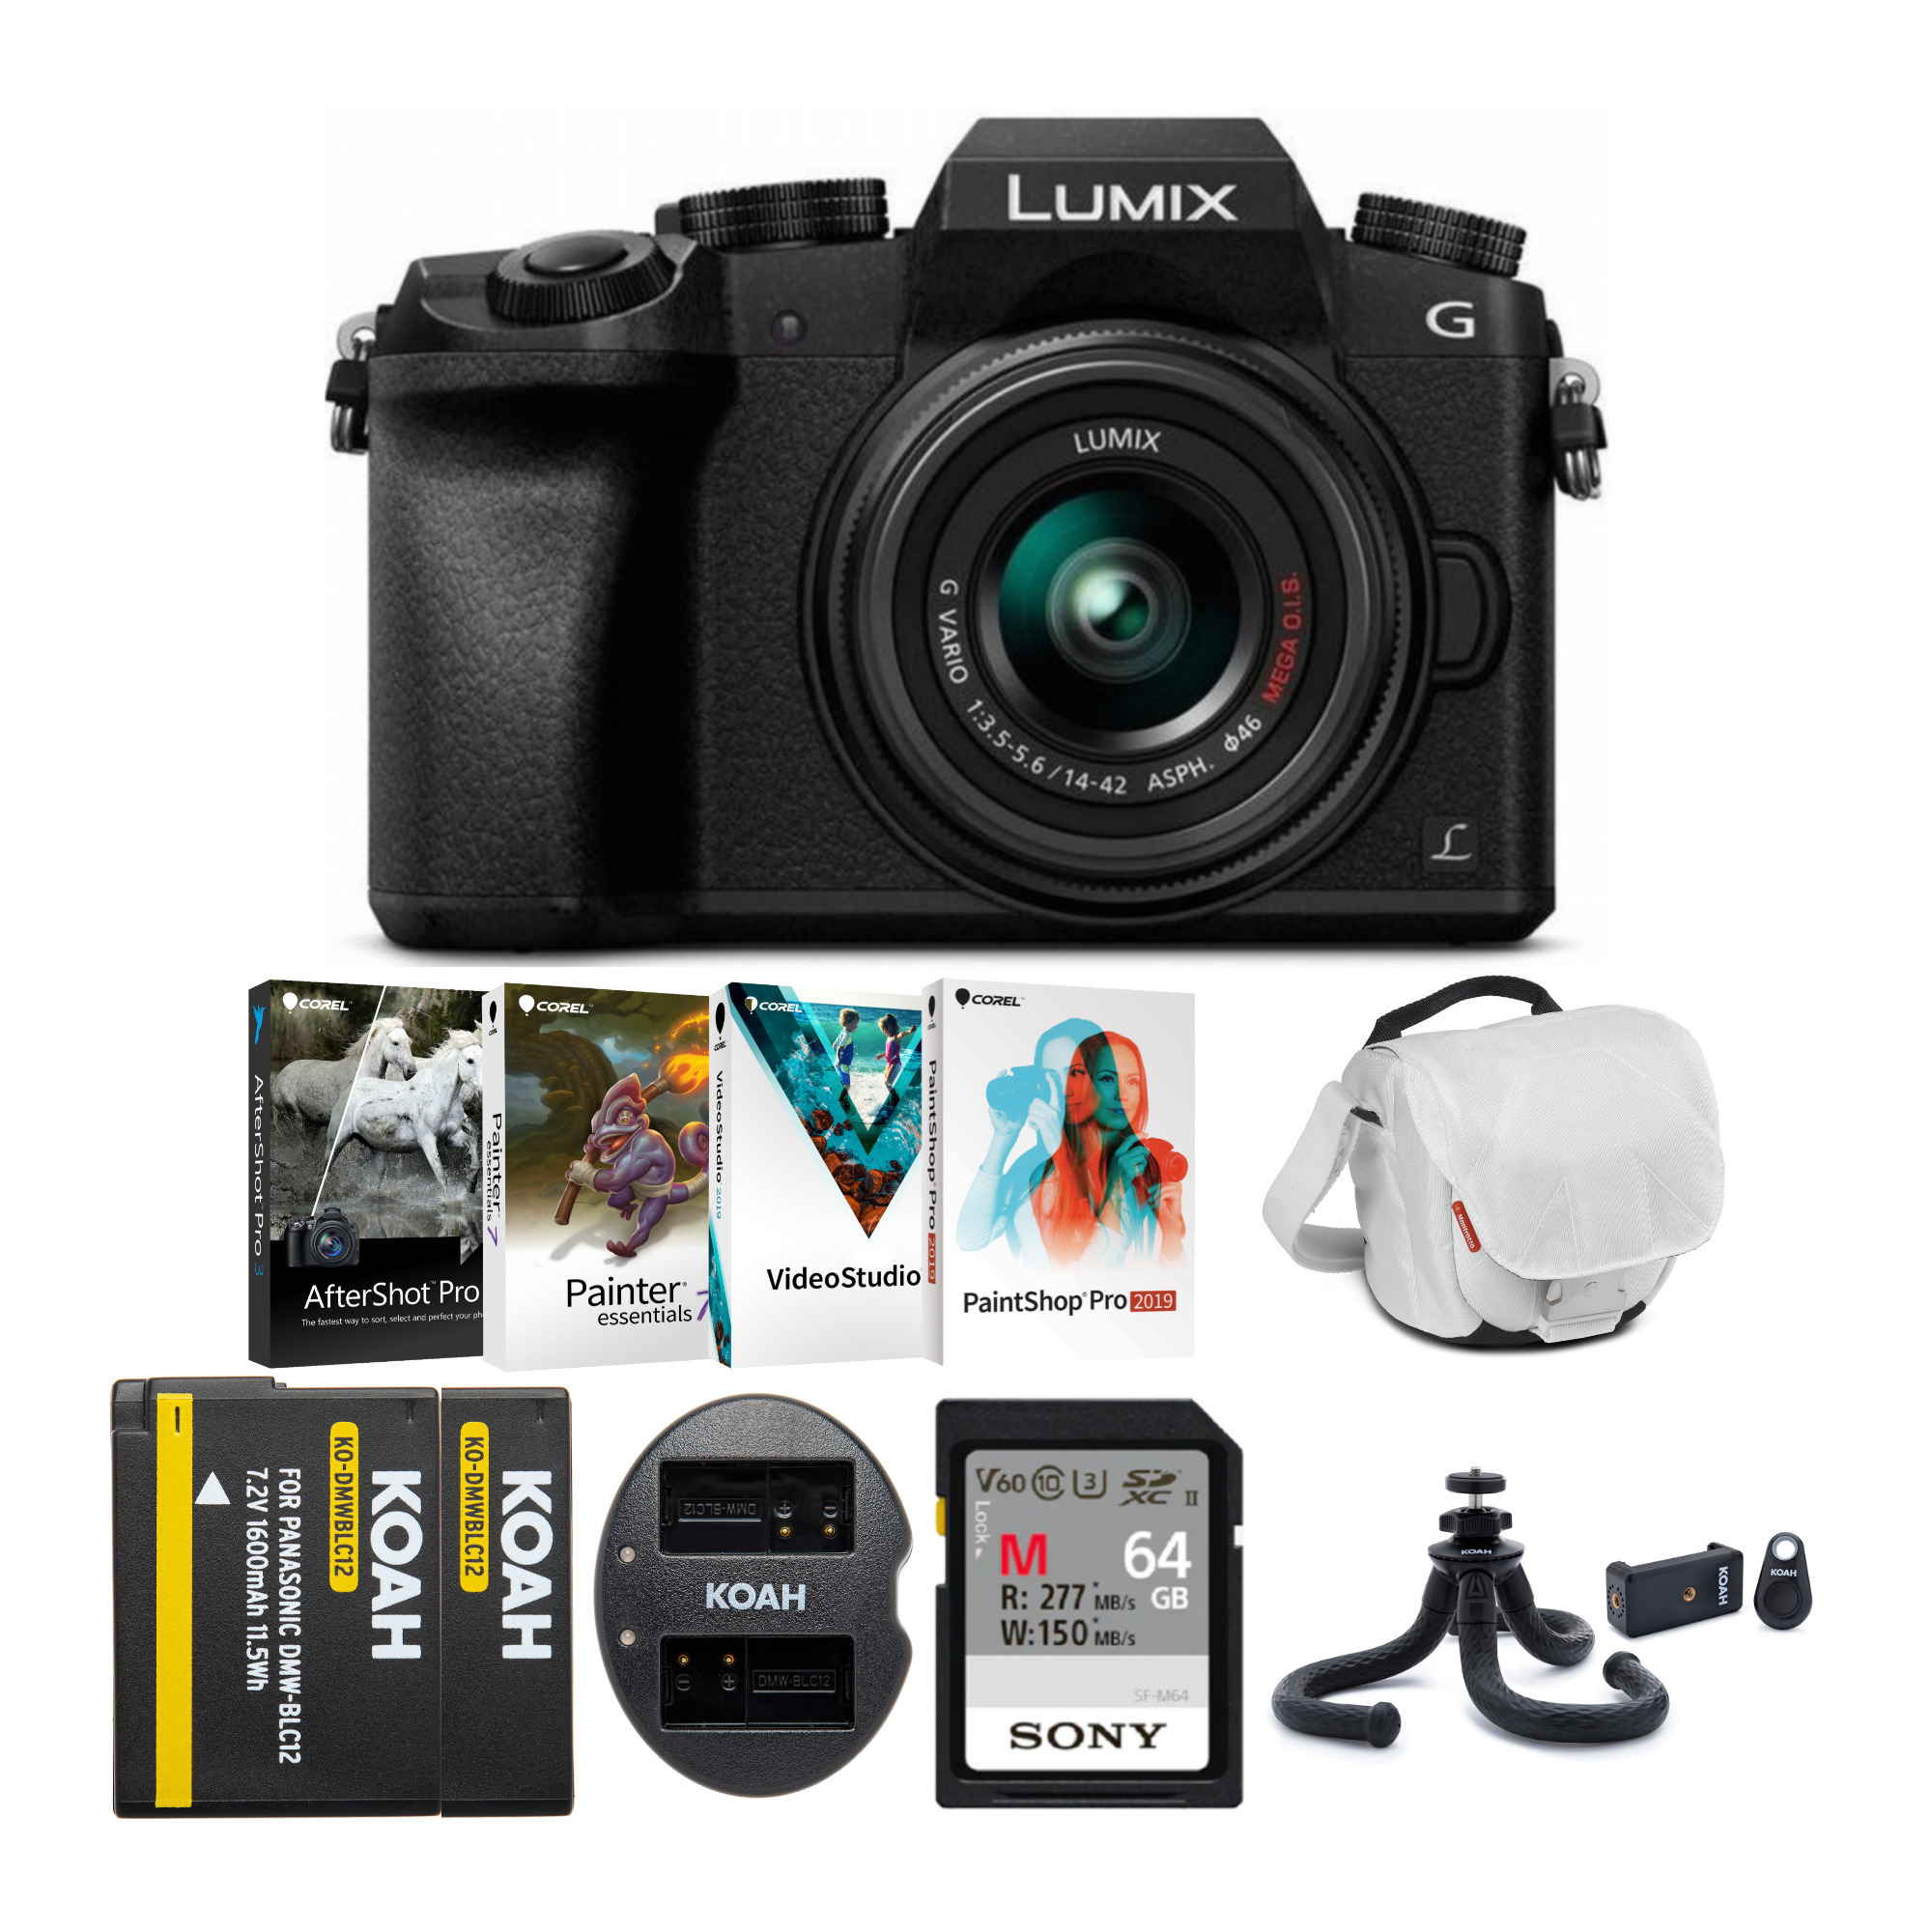 Panasonic LUMIX G7 Mirrorless Camera with 14-42mm f/3.5-5.6 Camera Lens Holiday Bundle in Black